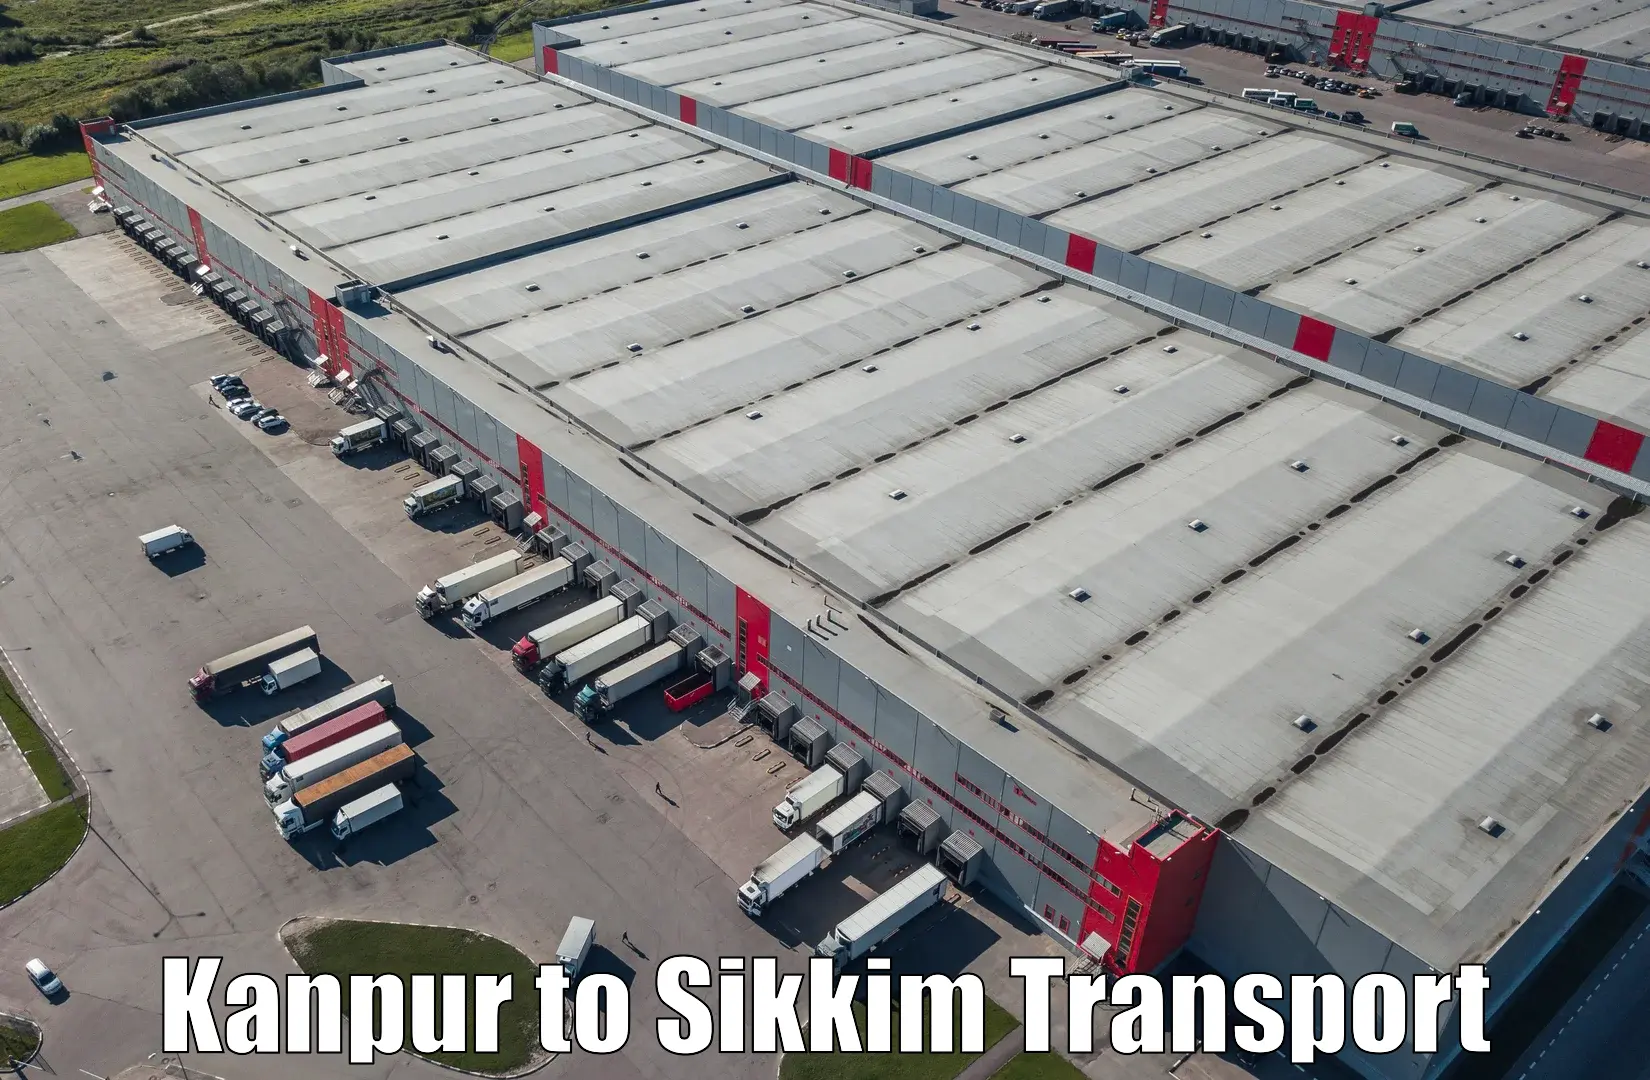 Online transport service Kanpur to Gangtok